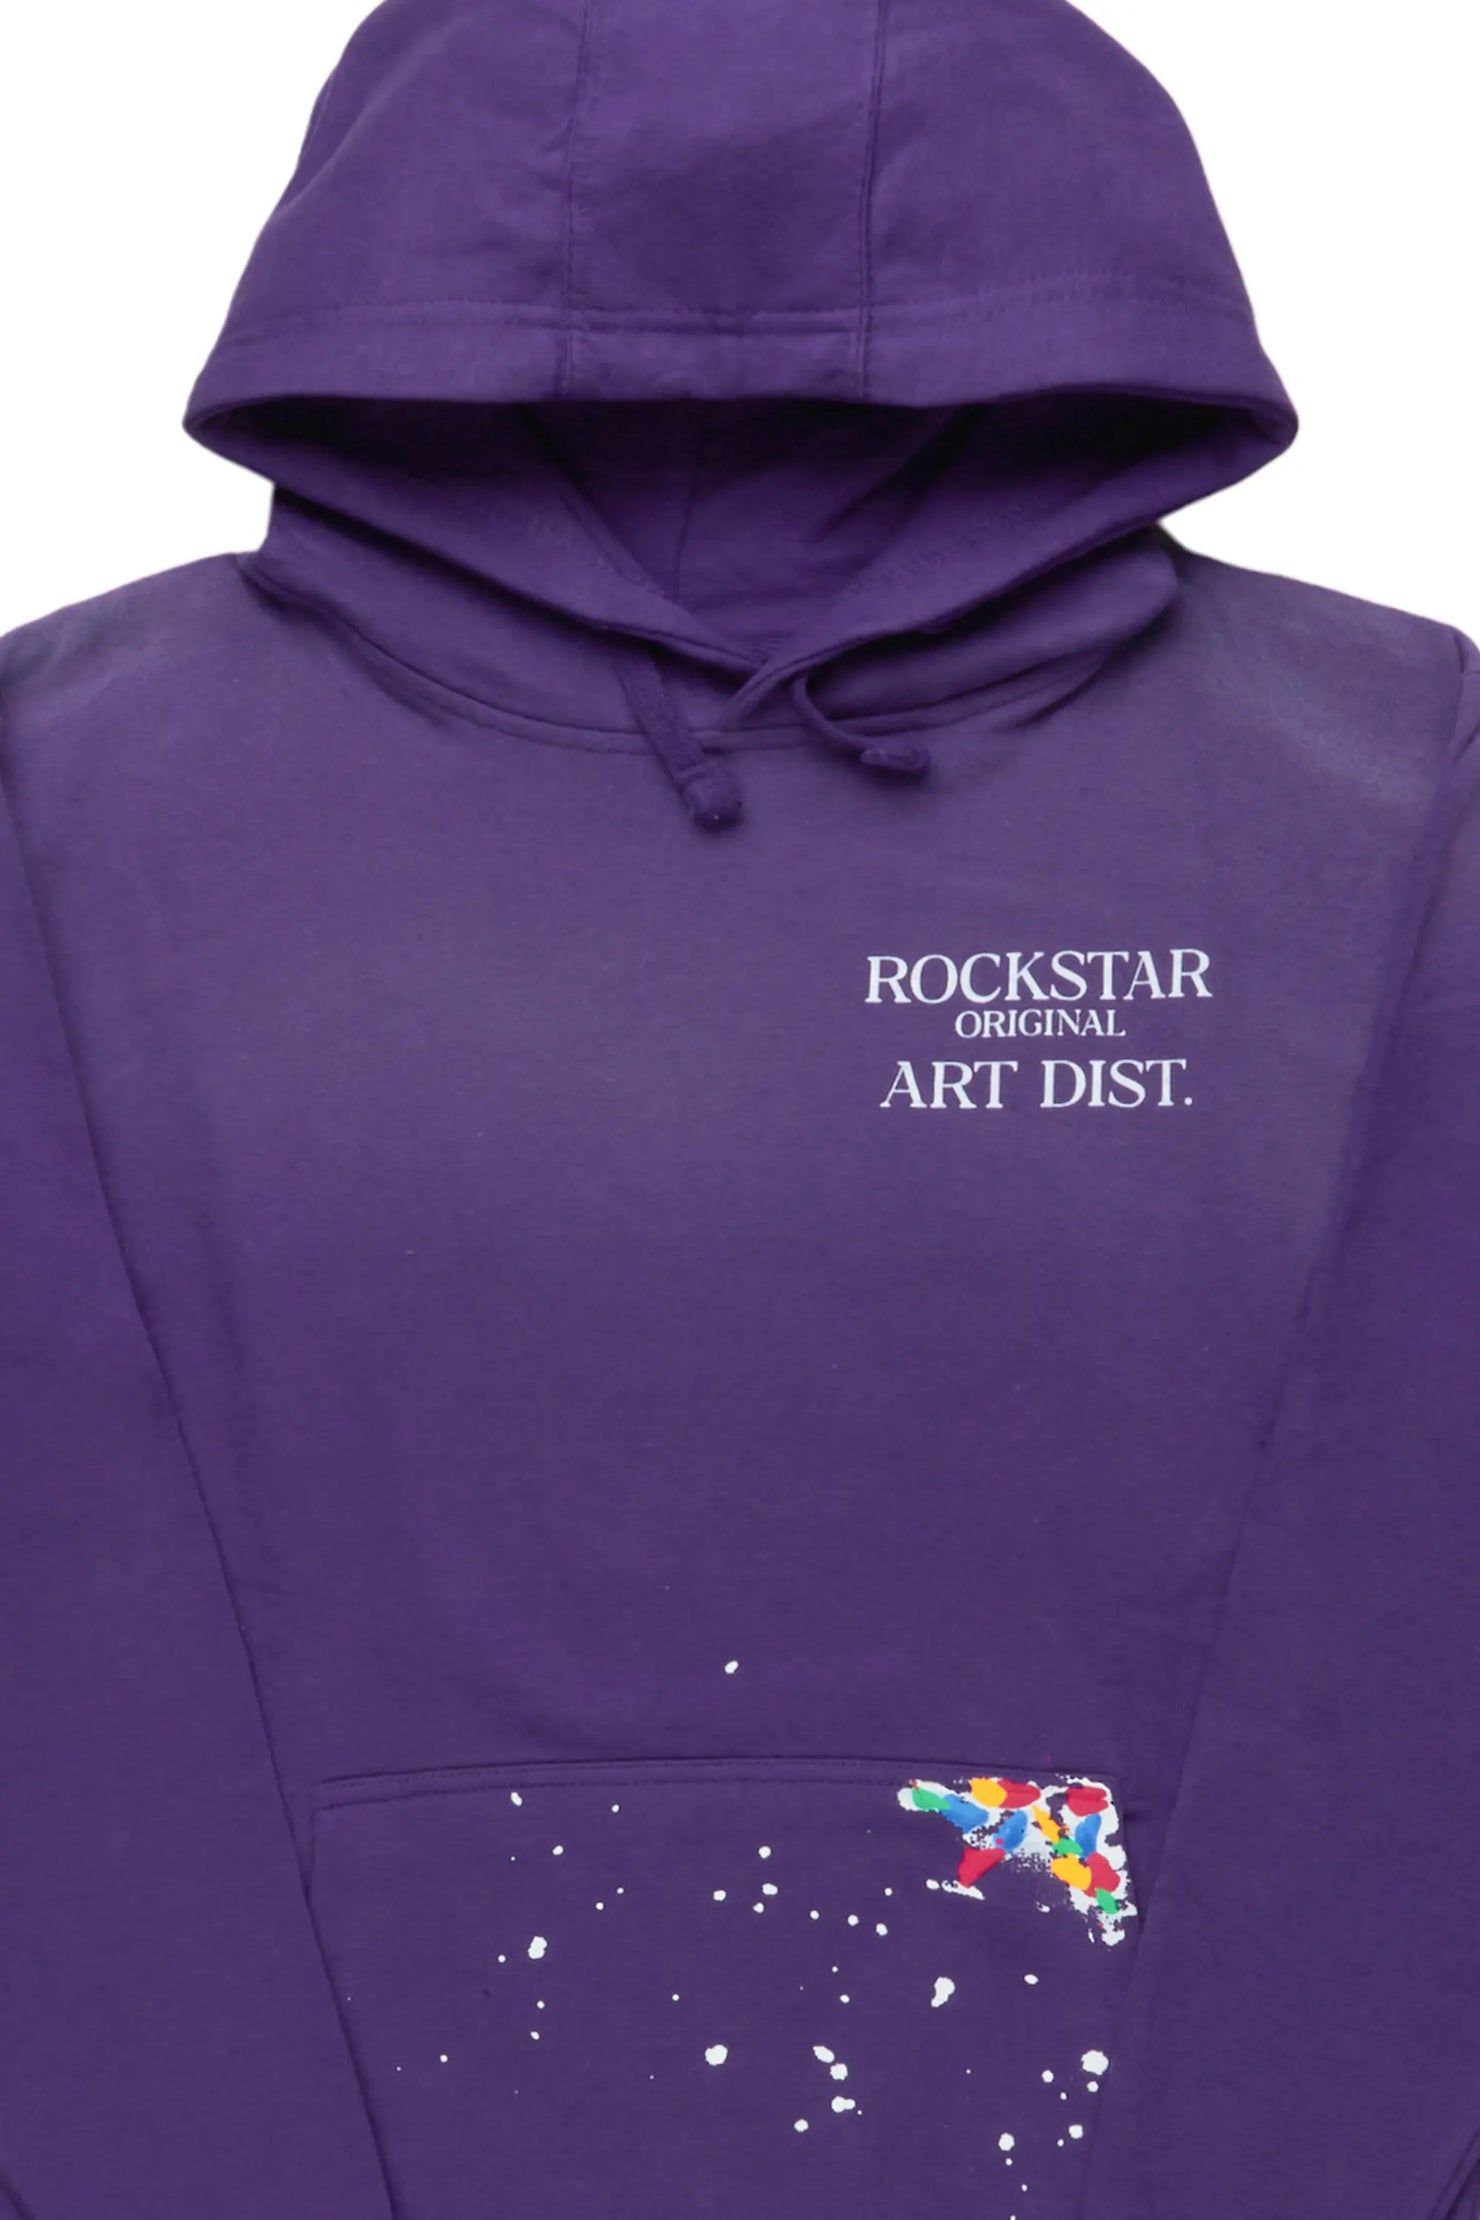 Rockstar Art Dist. Purple Graphic Hoodie